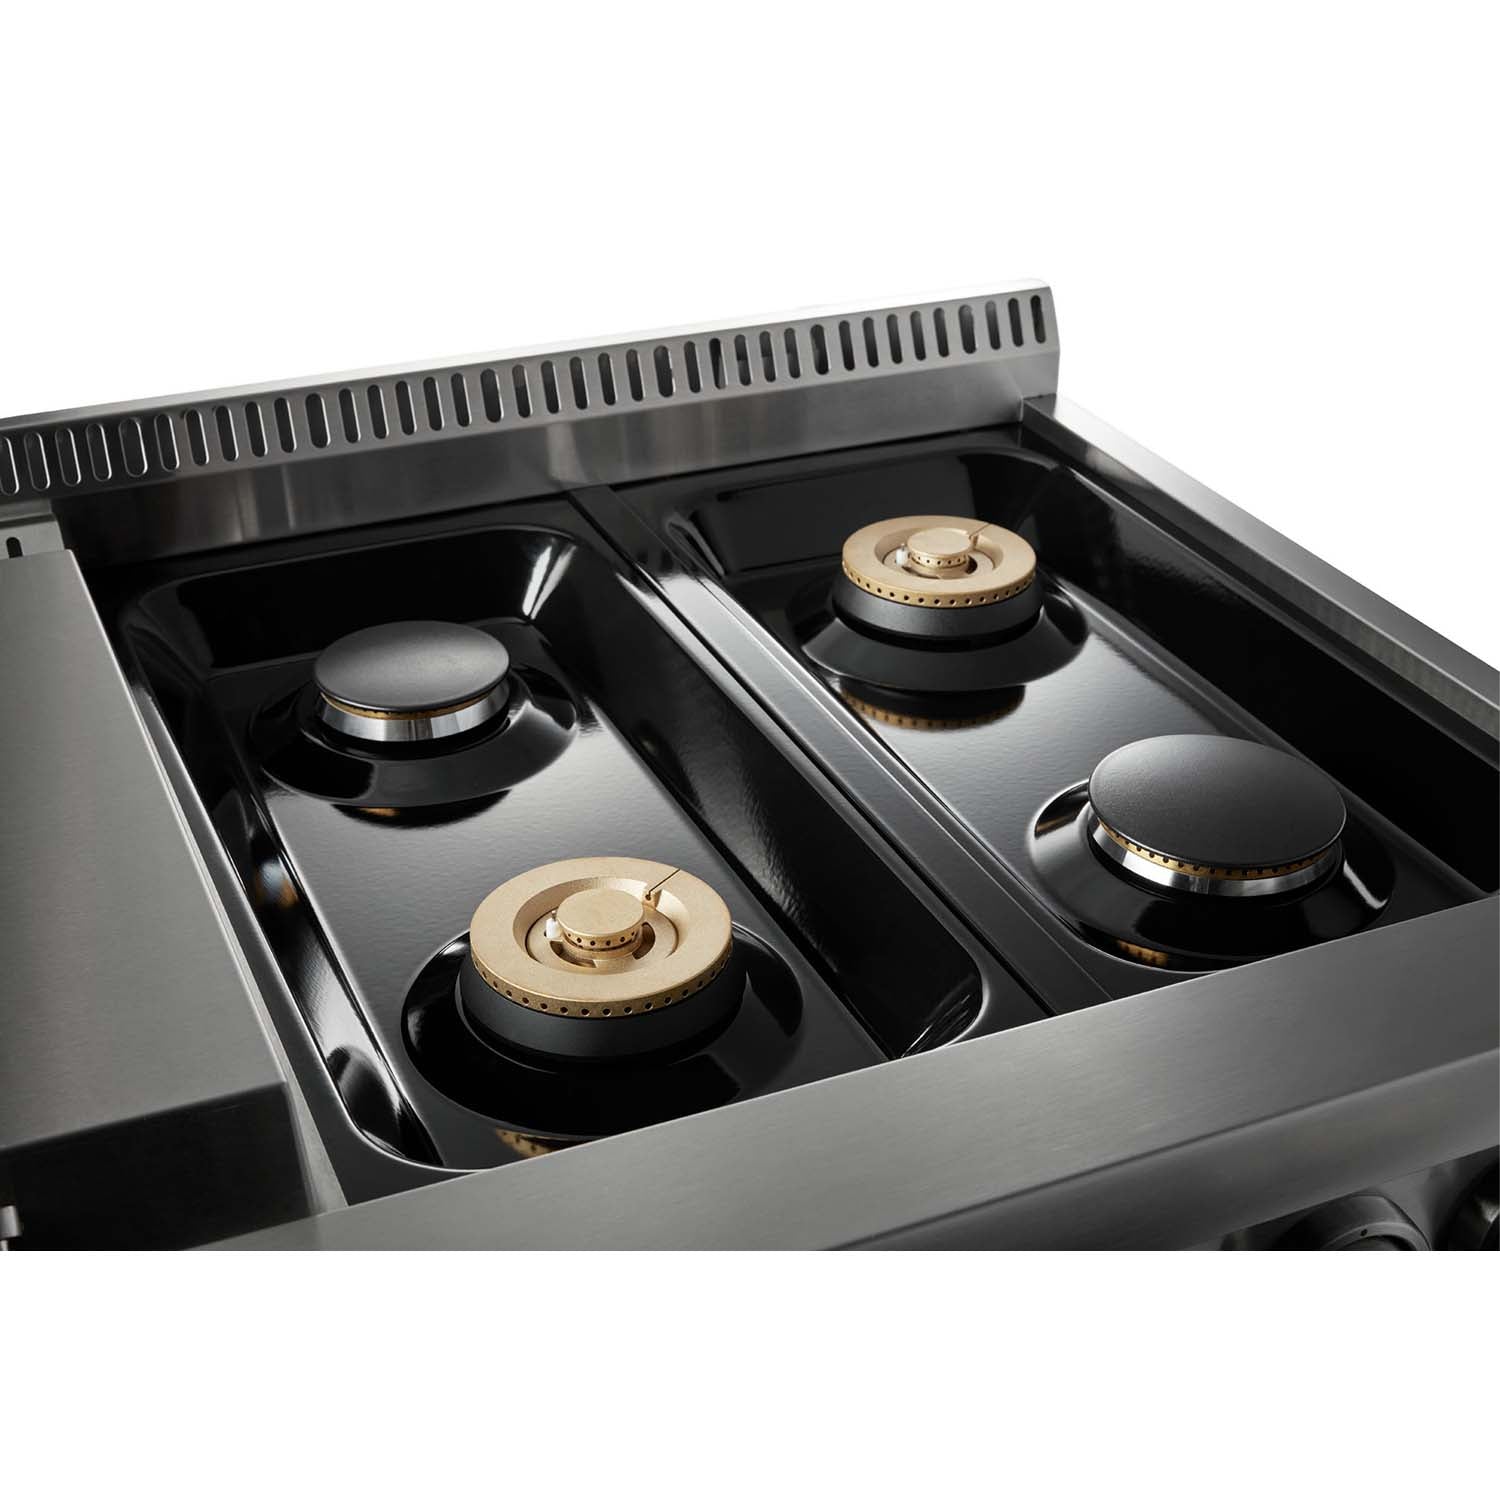 Thor Kitchen 48 Inch Professional Dual Fuel Range in Stainless Steel - Model HRD4803U (Renewed)